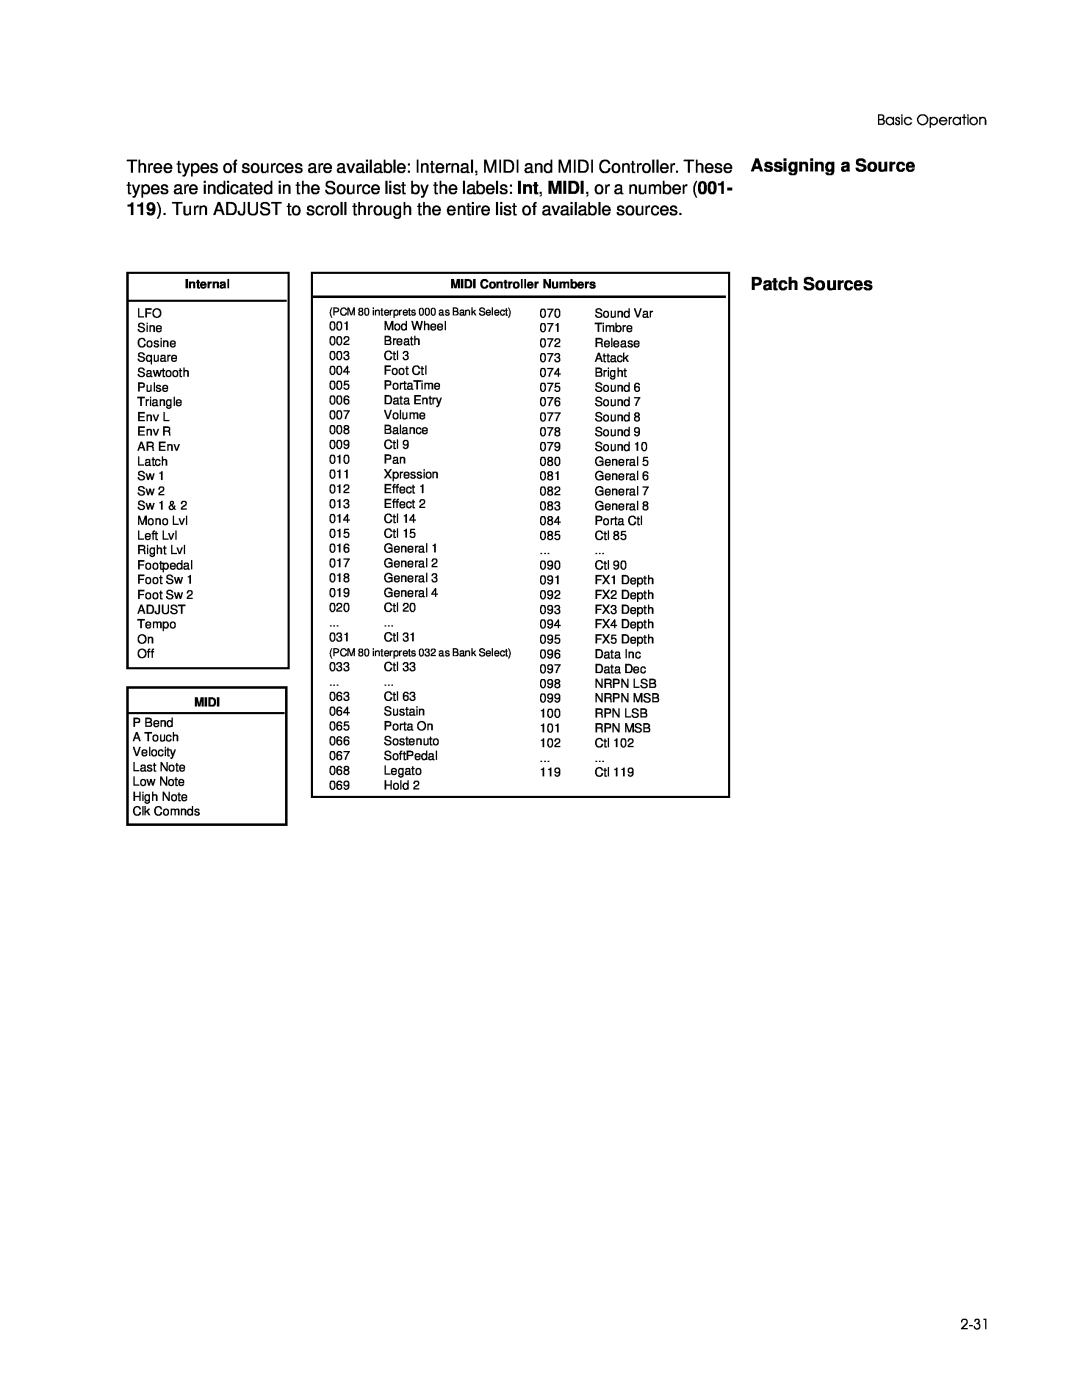 Lexicon PCM 80 manual Patch Sources, Basic Operation, 2-31 